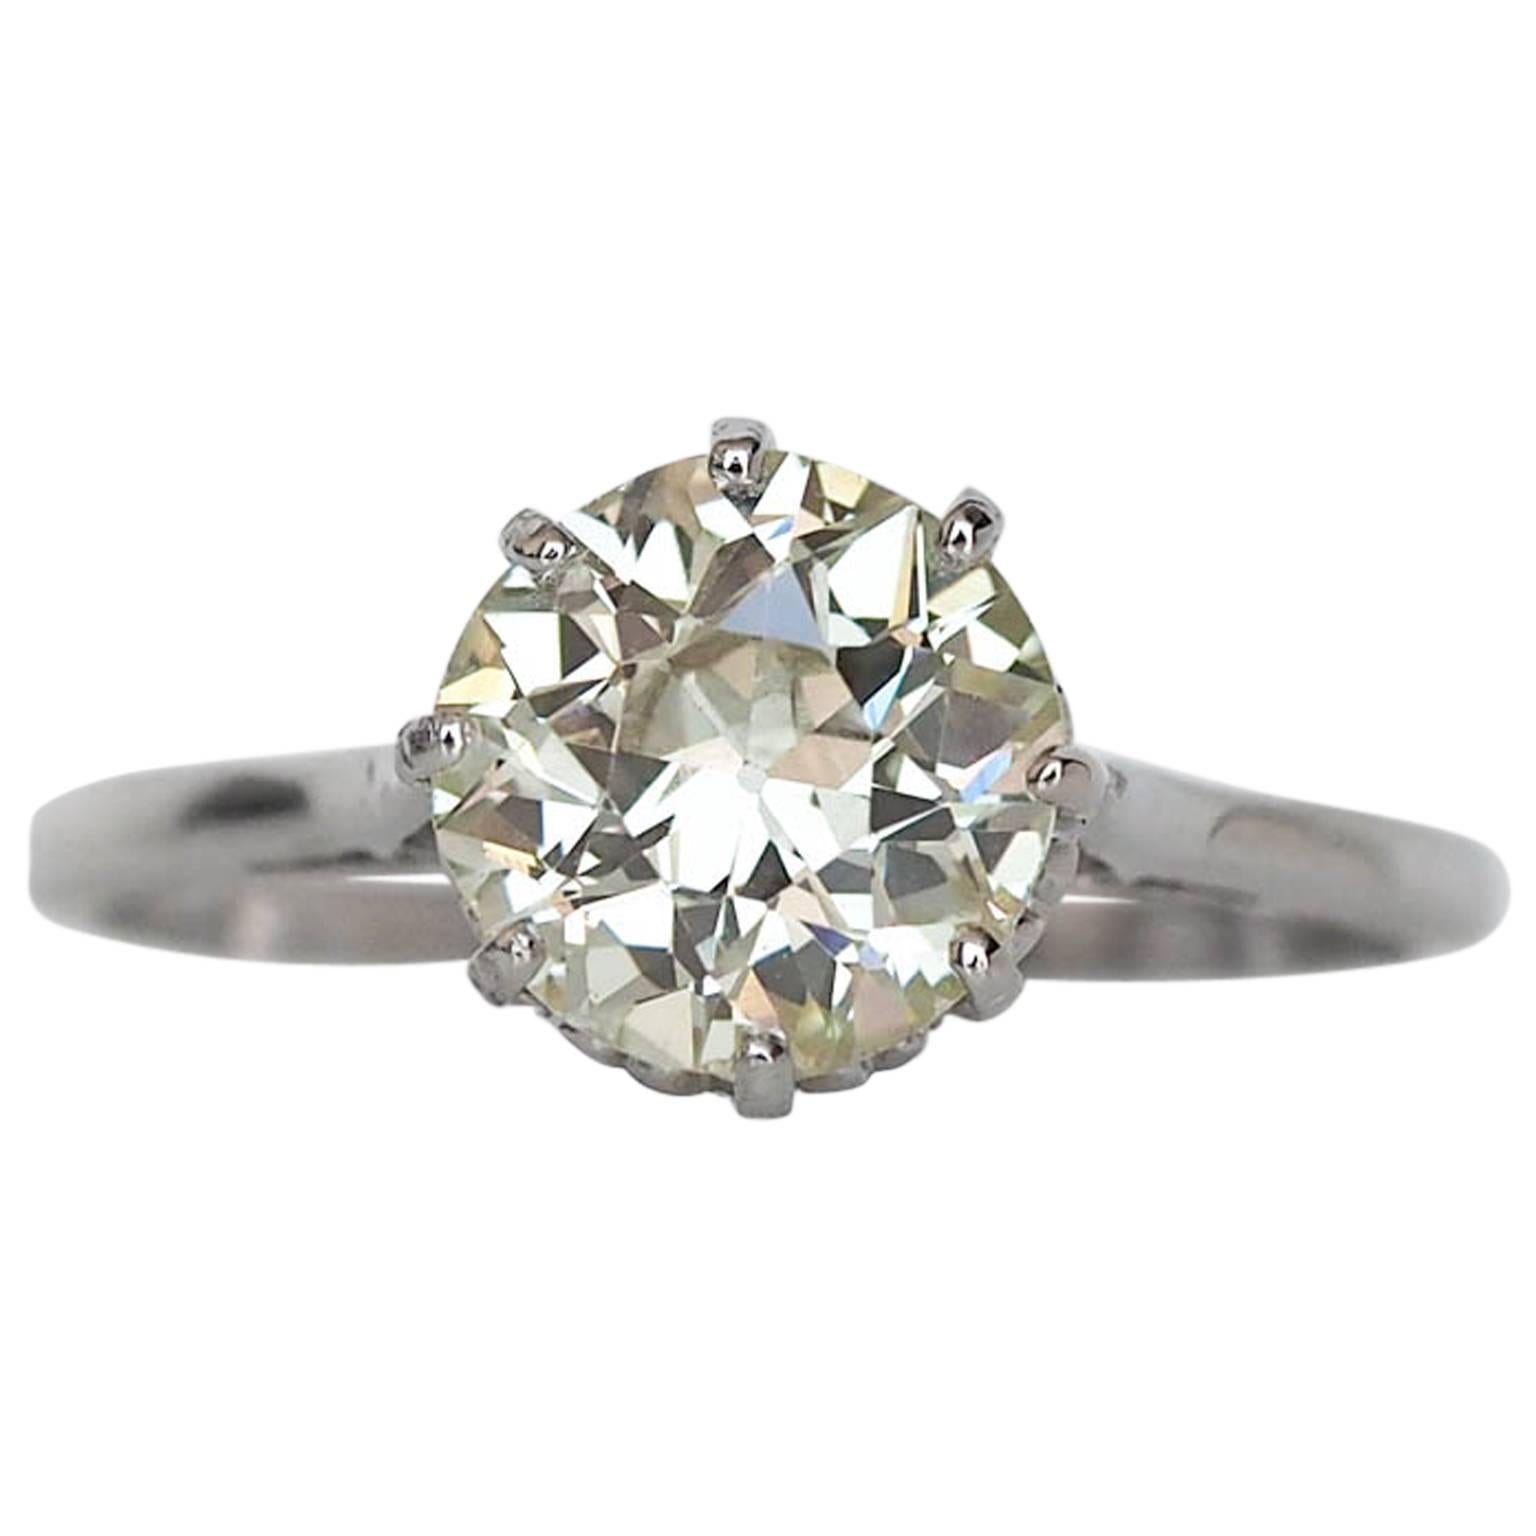 1920s 1.99 Carat GIA Cert Old European Cut Diamond Engagement Ring